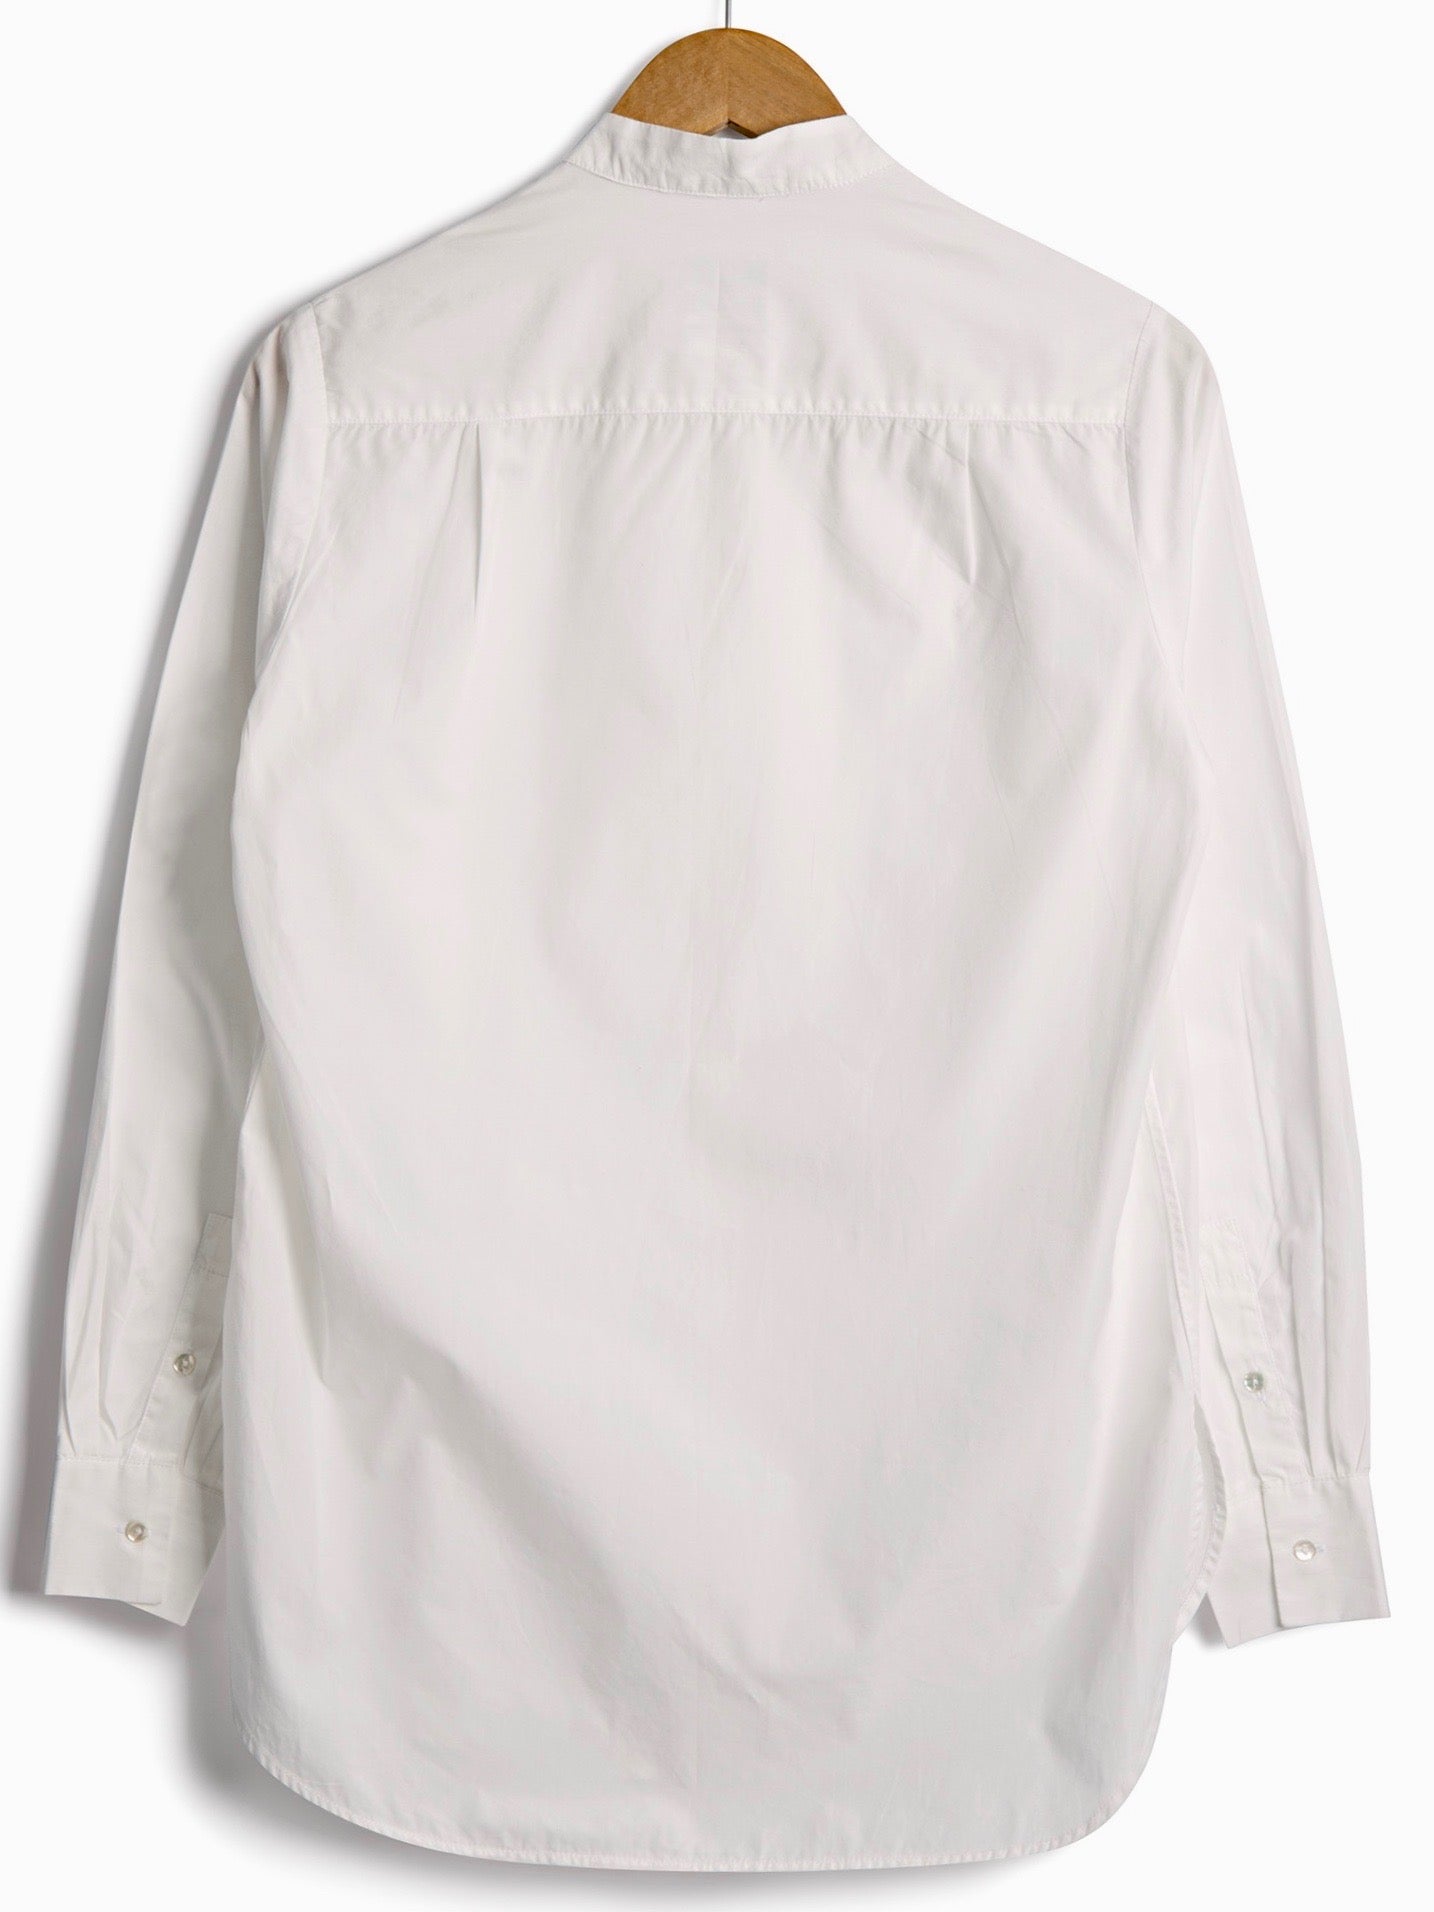 DRESS SHIRT IN WHITE POPLIN, Shirt, Hickman & Bousfield - Hickman & Bousfield, Safari and Travel Clothing